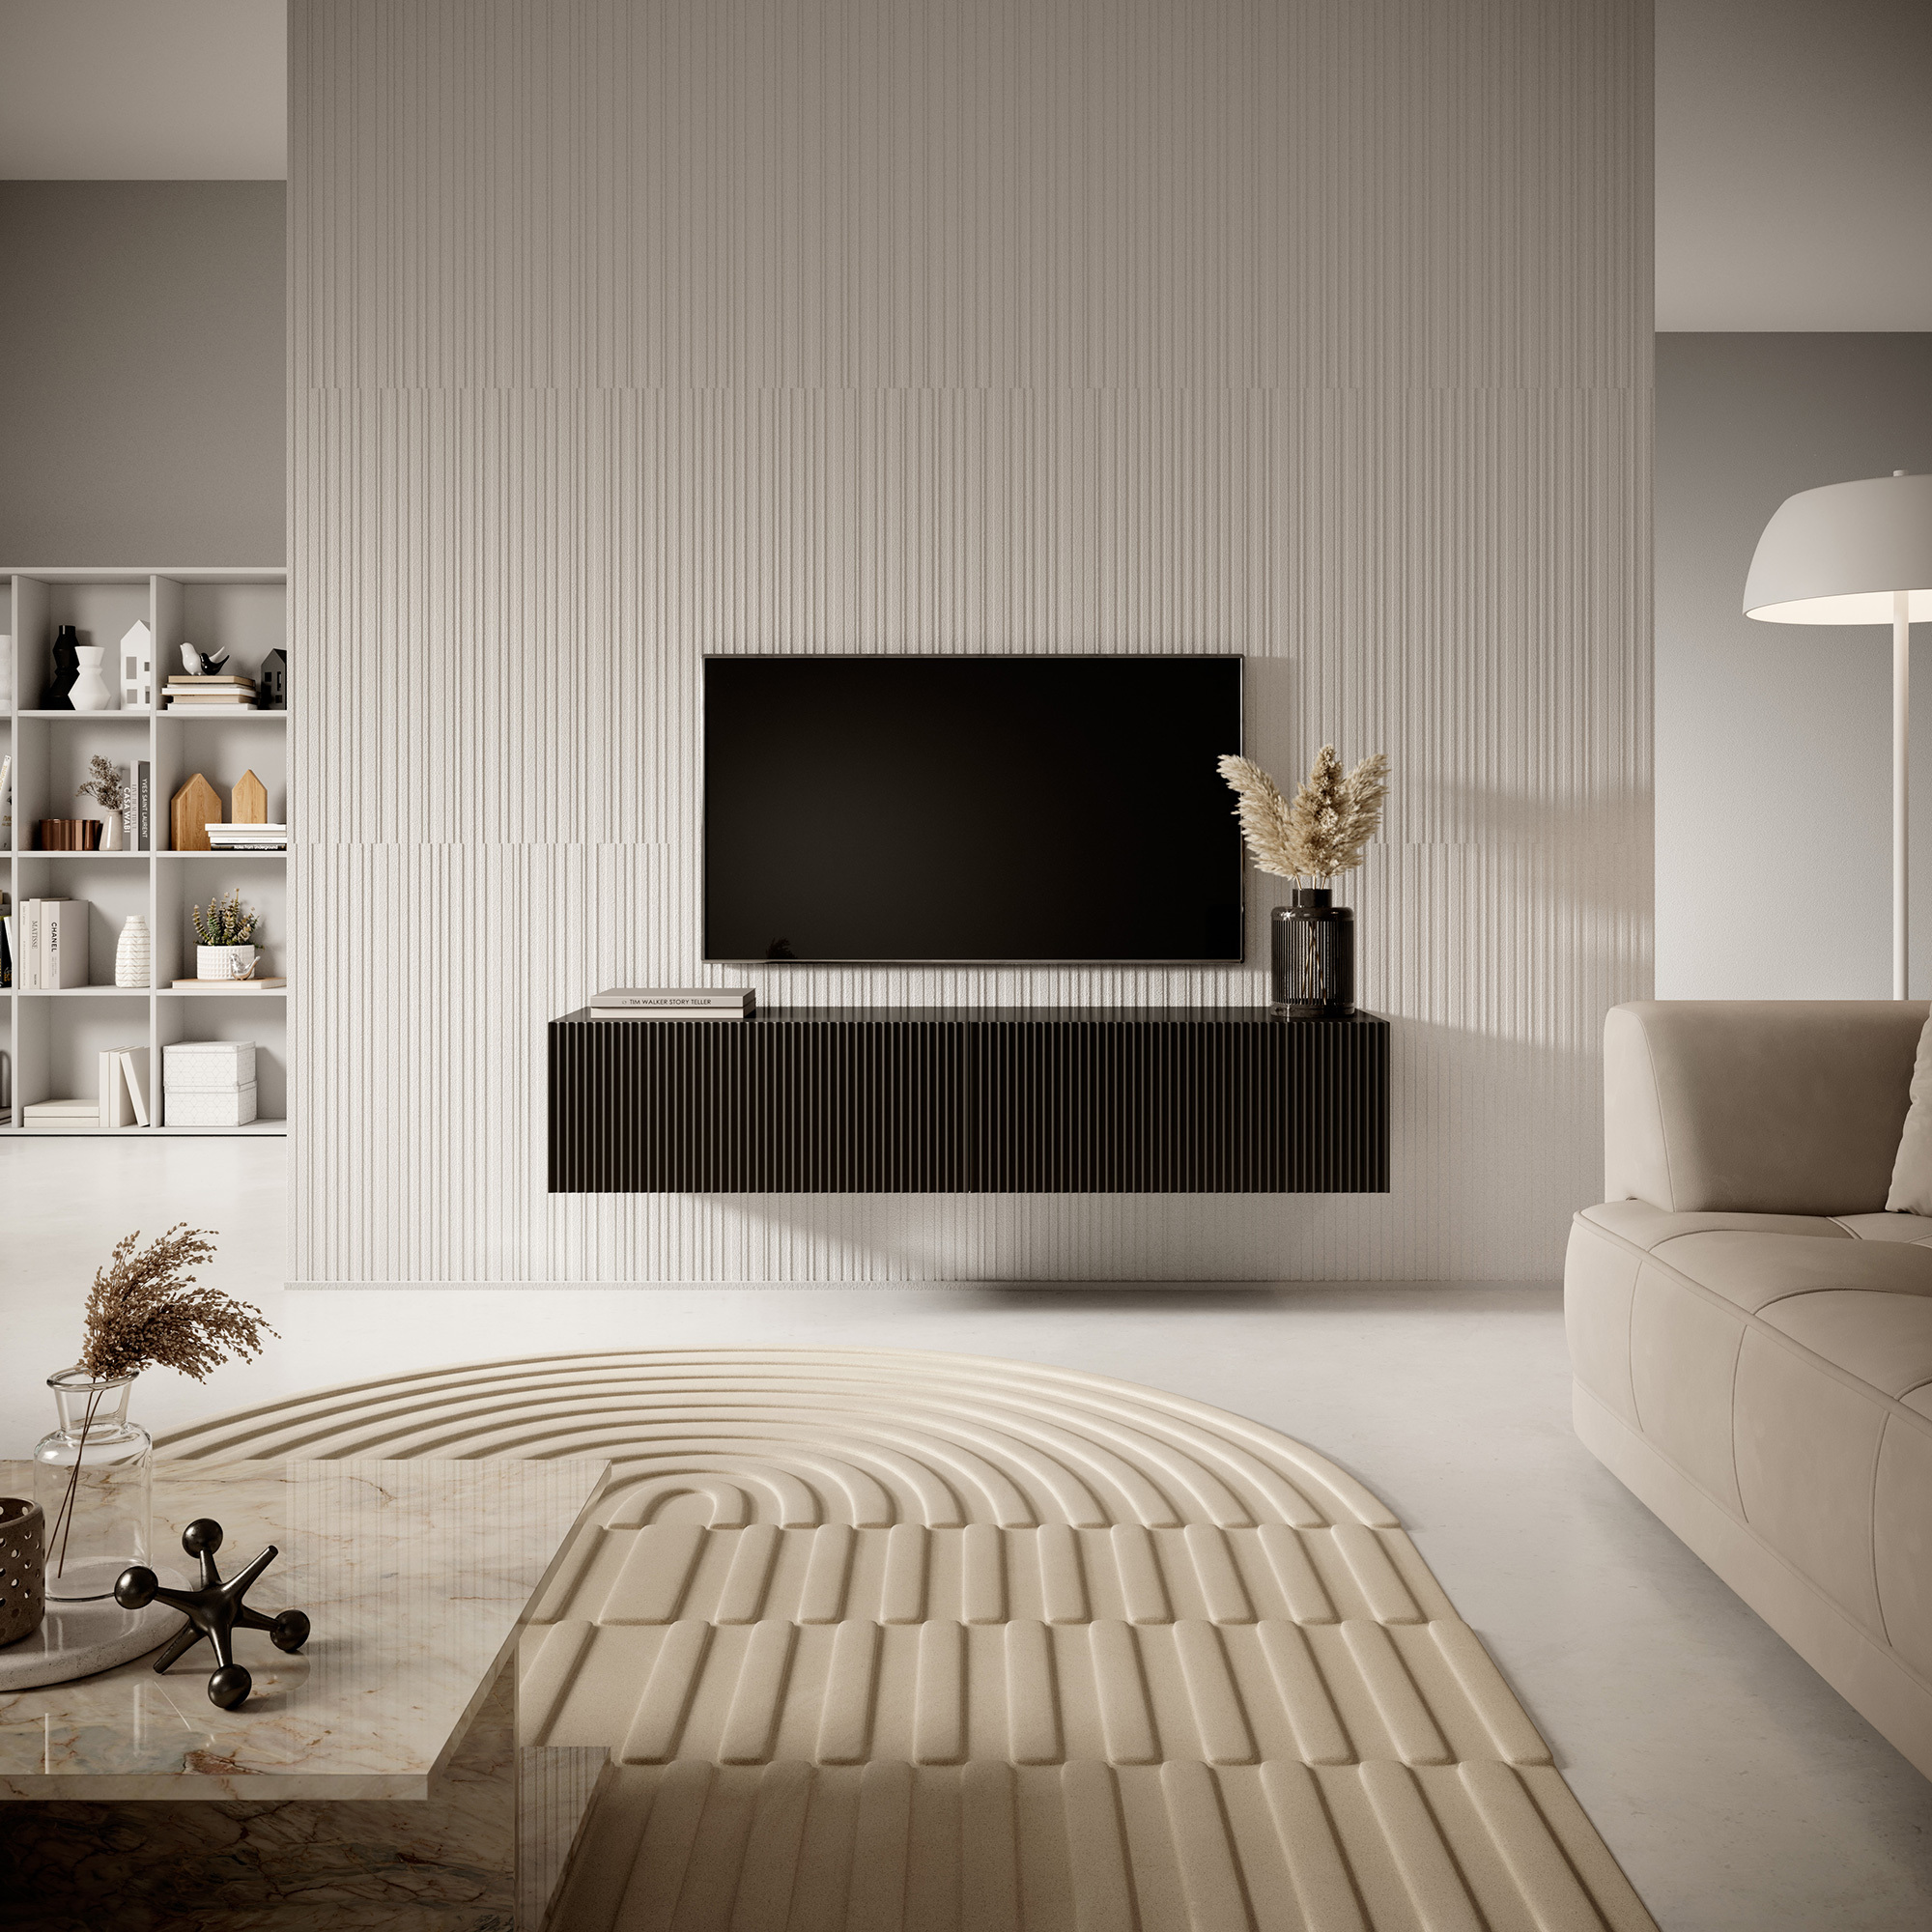 VELDIO Meuble TV 140 cm noir avec façade fraisée